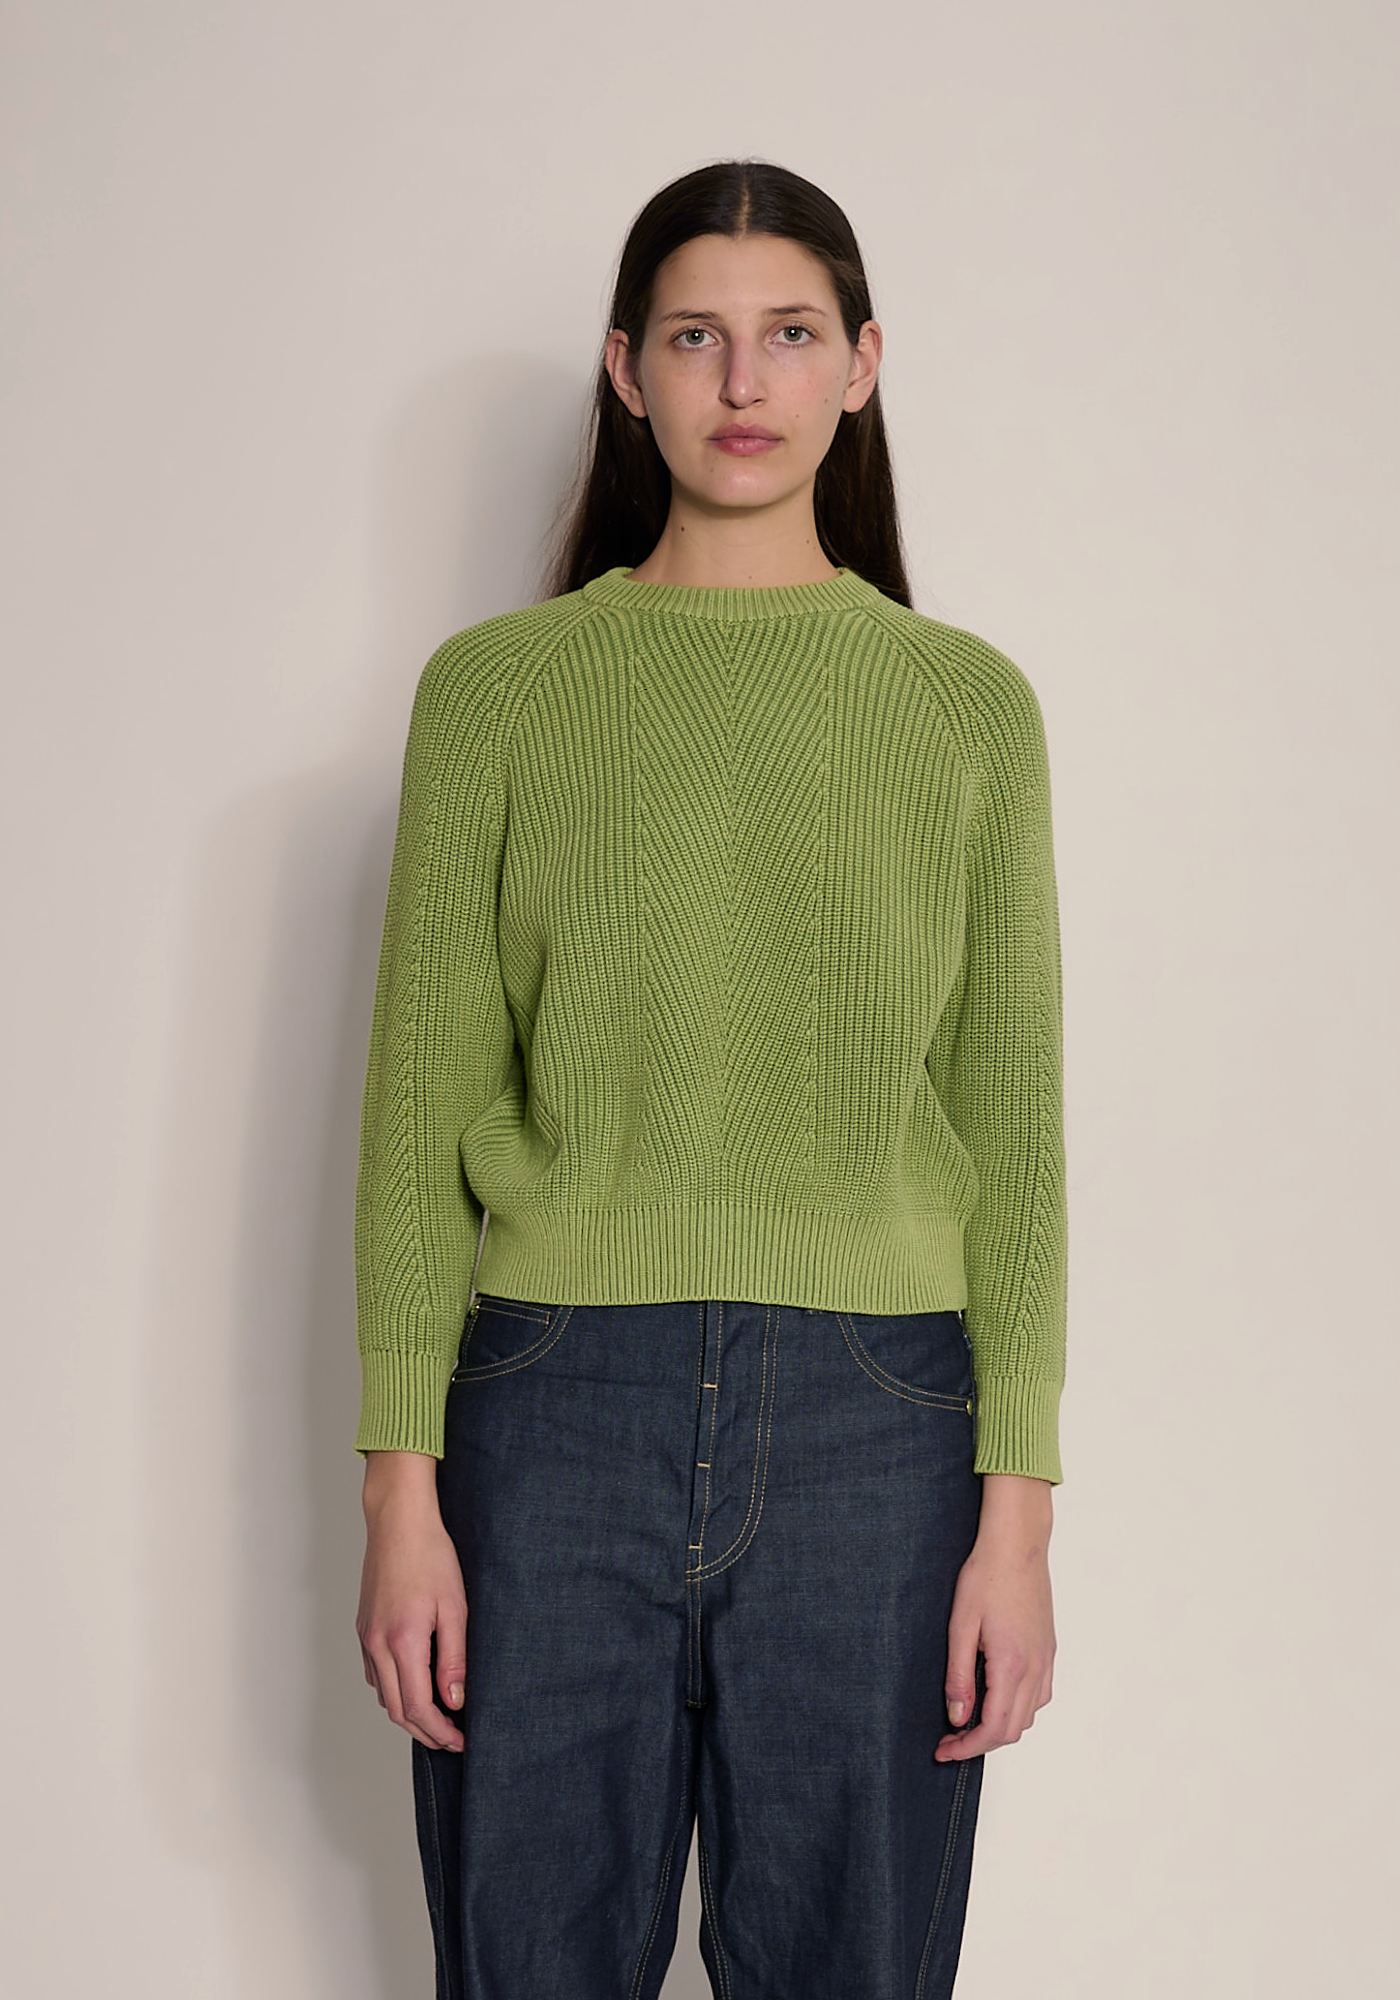 Chelsea Cotton Sweater